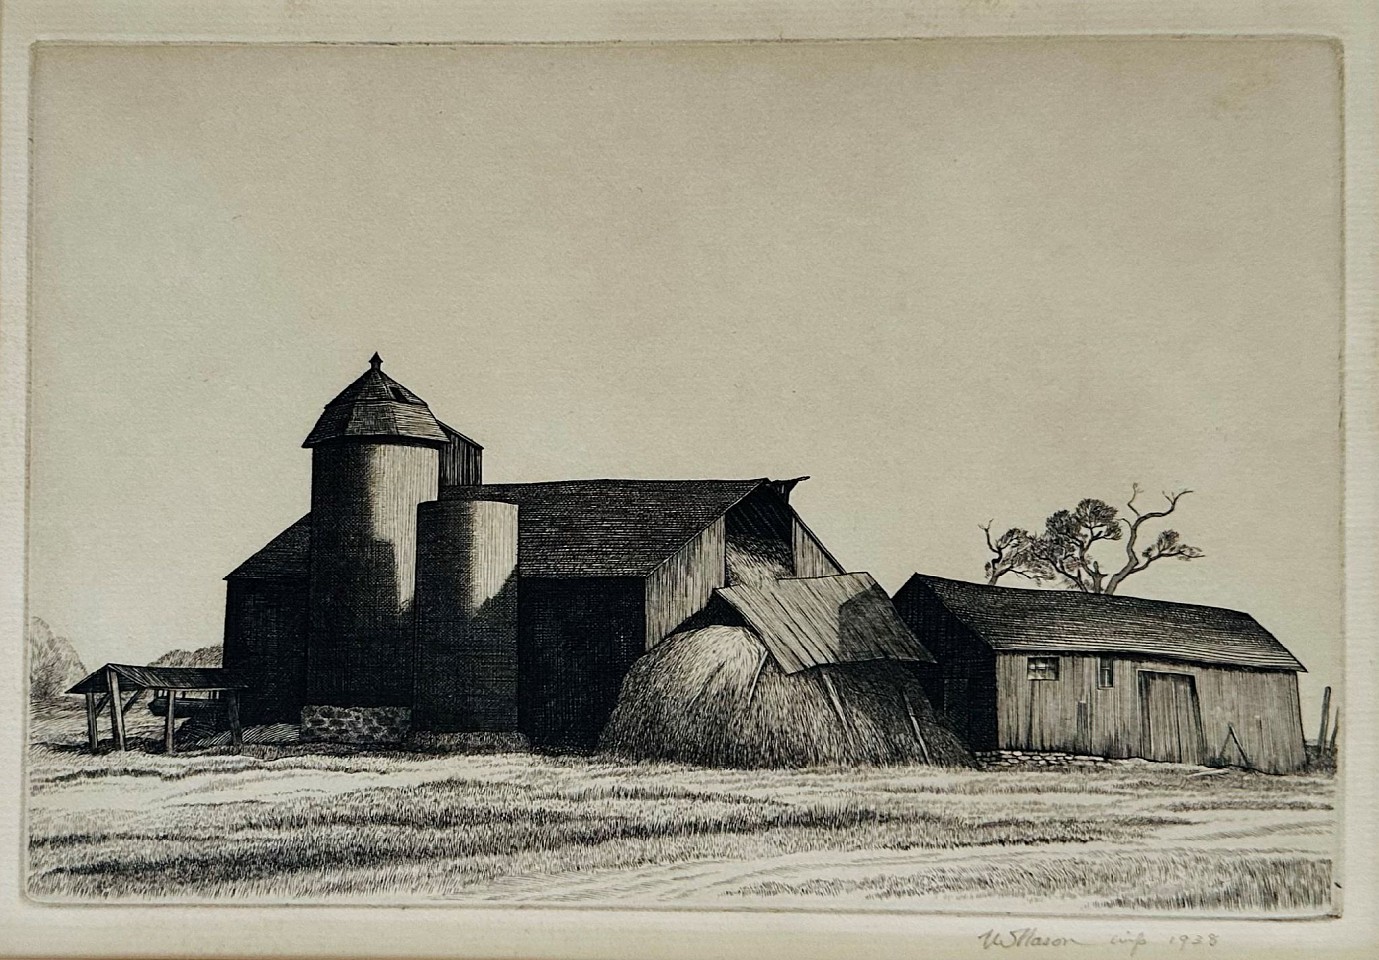 Thomas Willoughby Nason, Hebron Barns, 1938
copper engraving on paper, 5 1/4"" x 7 7/8""
JCA 6816
$950